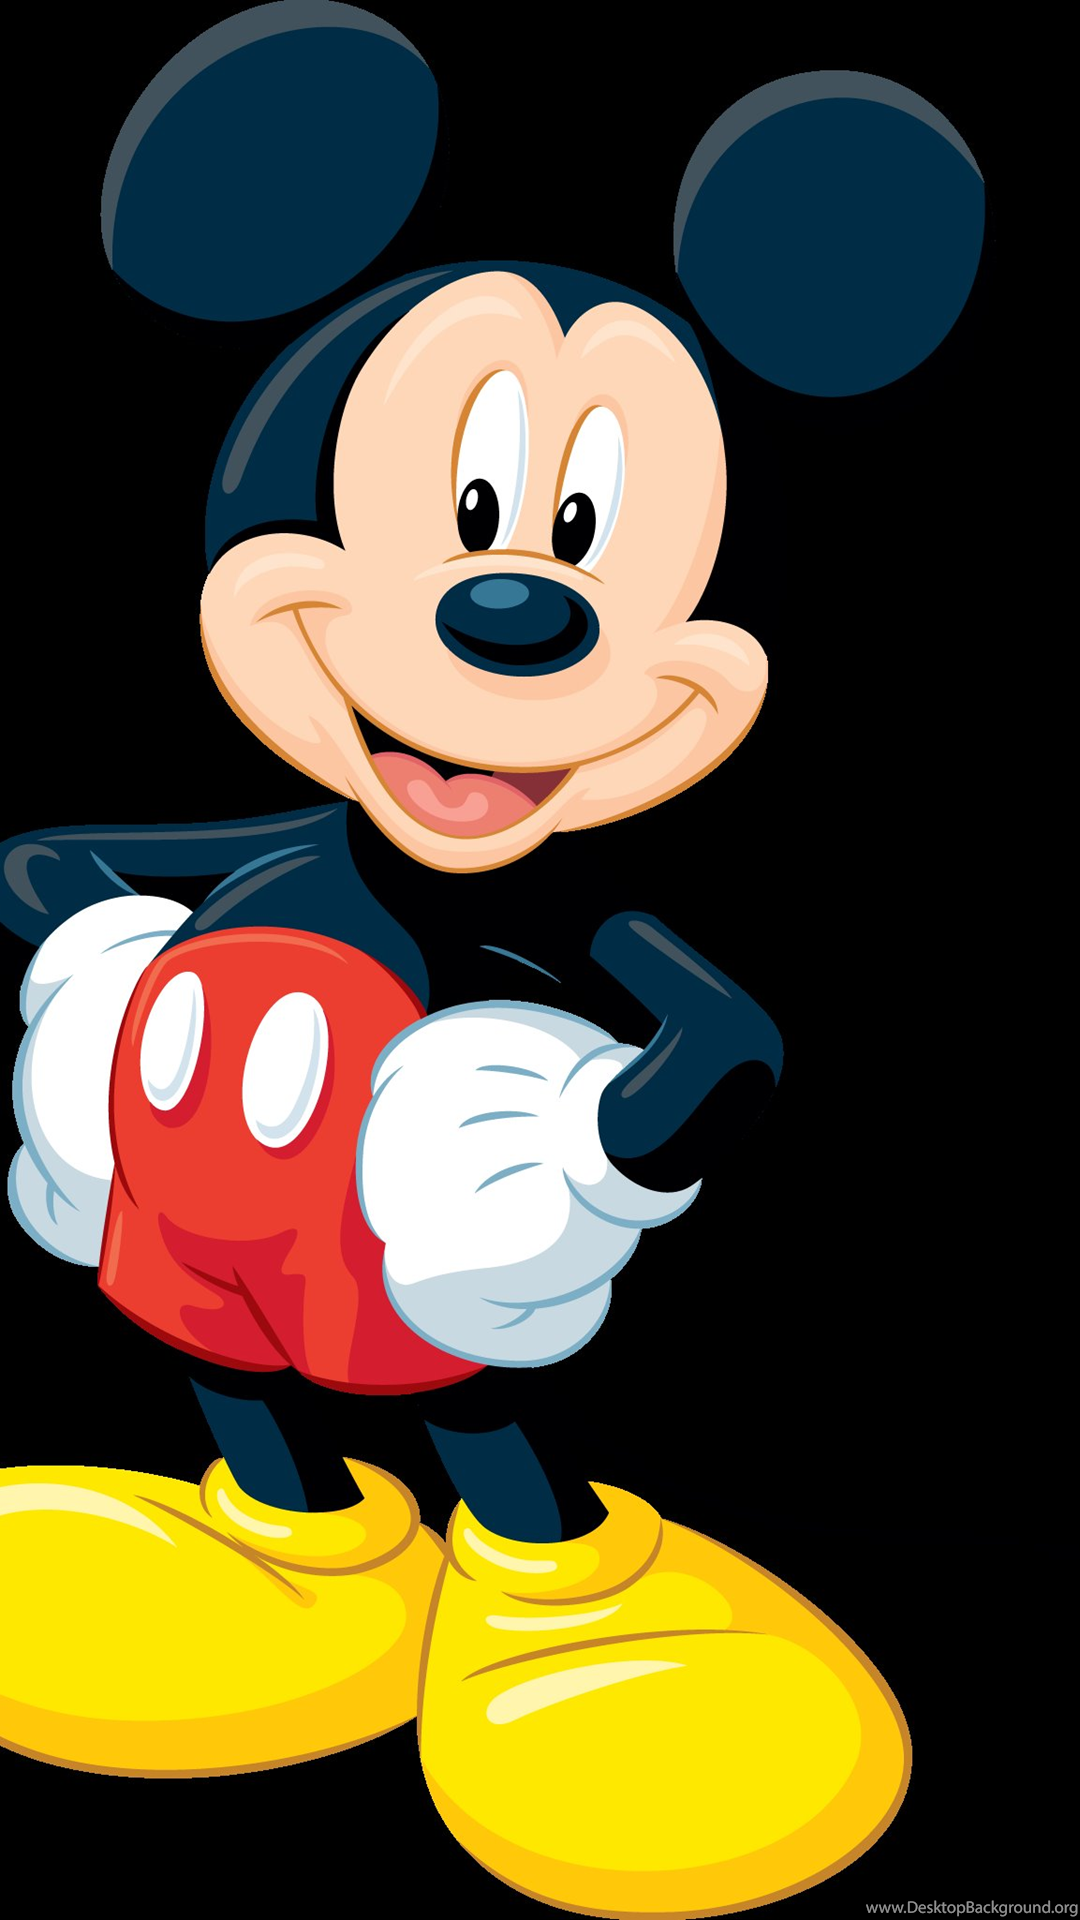 Mickey Mouse Cartoon HD Image Wallpaper For Mac Cartoons Wallpaper Desktop Background